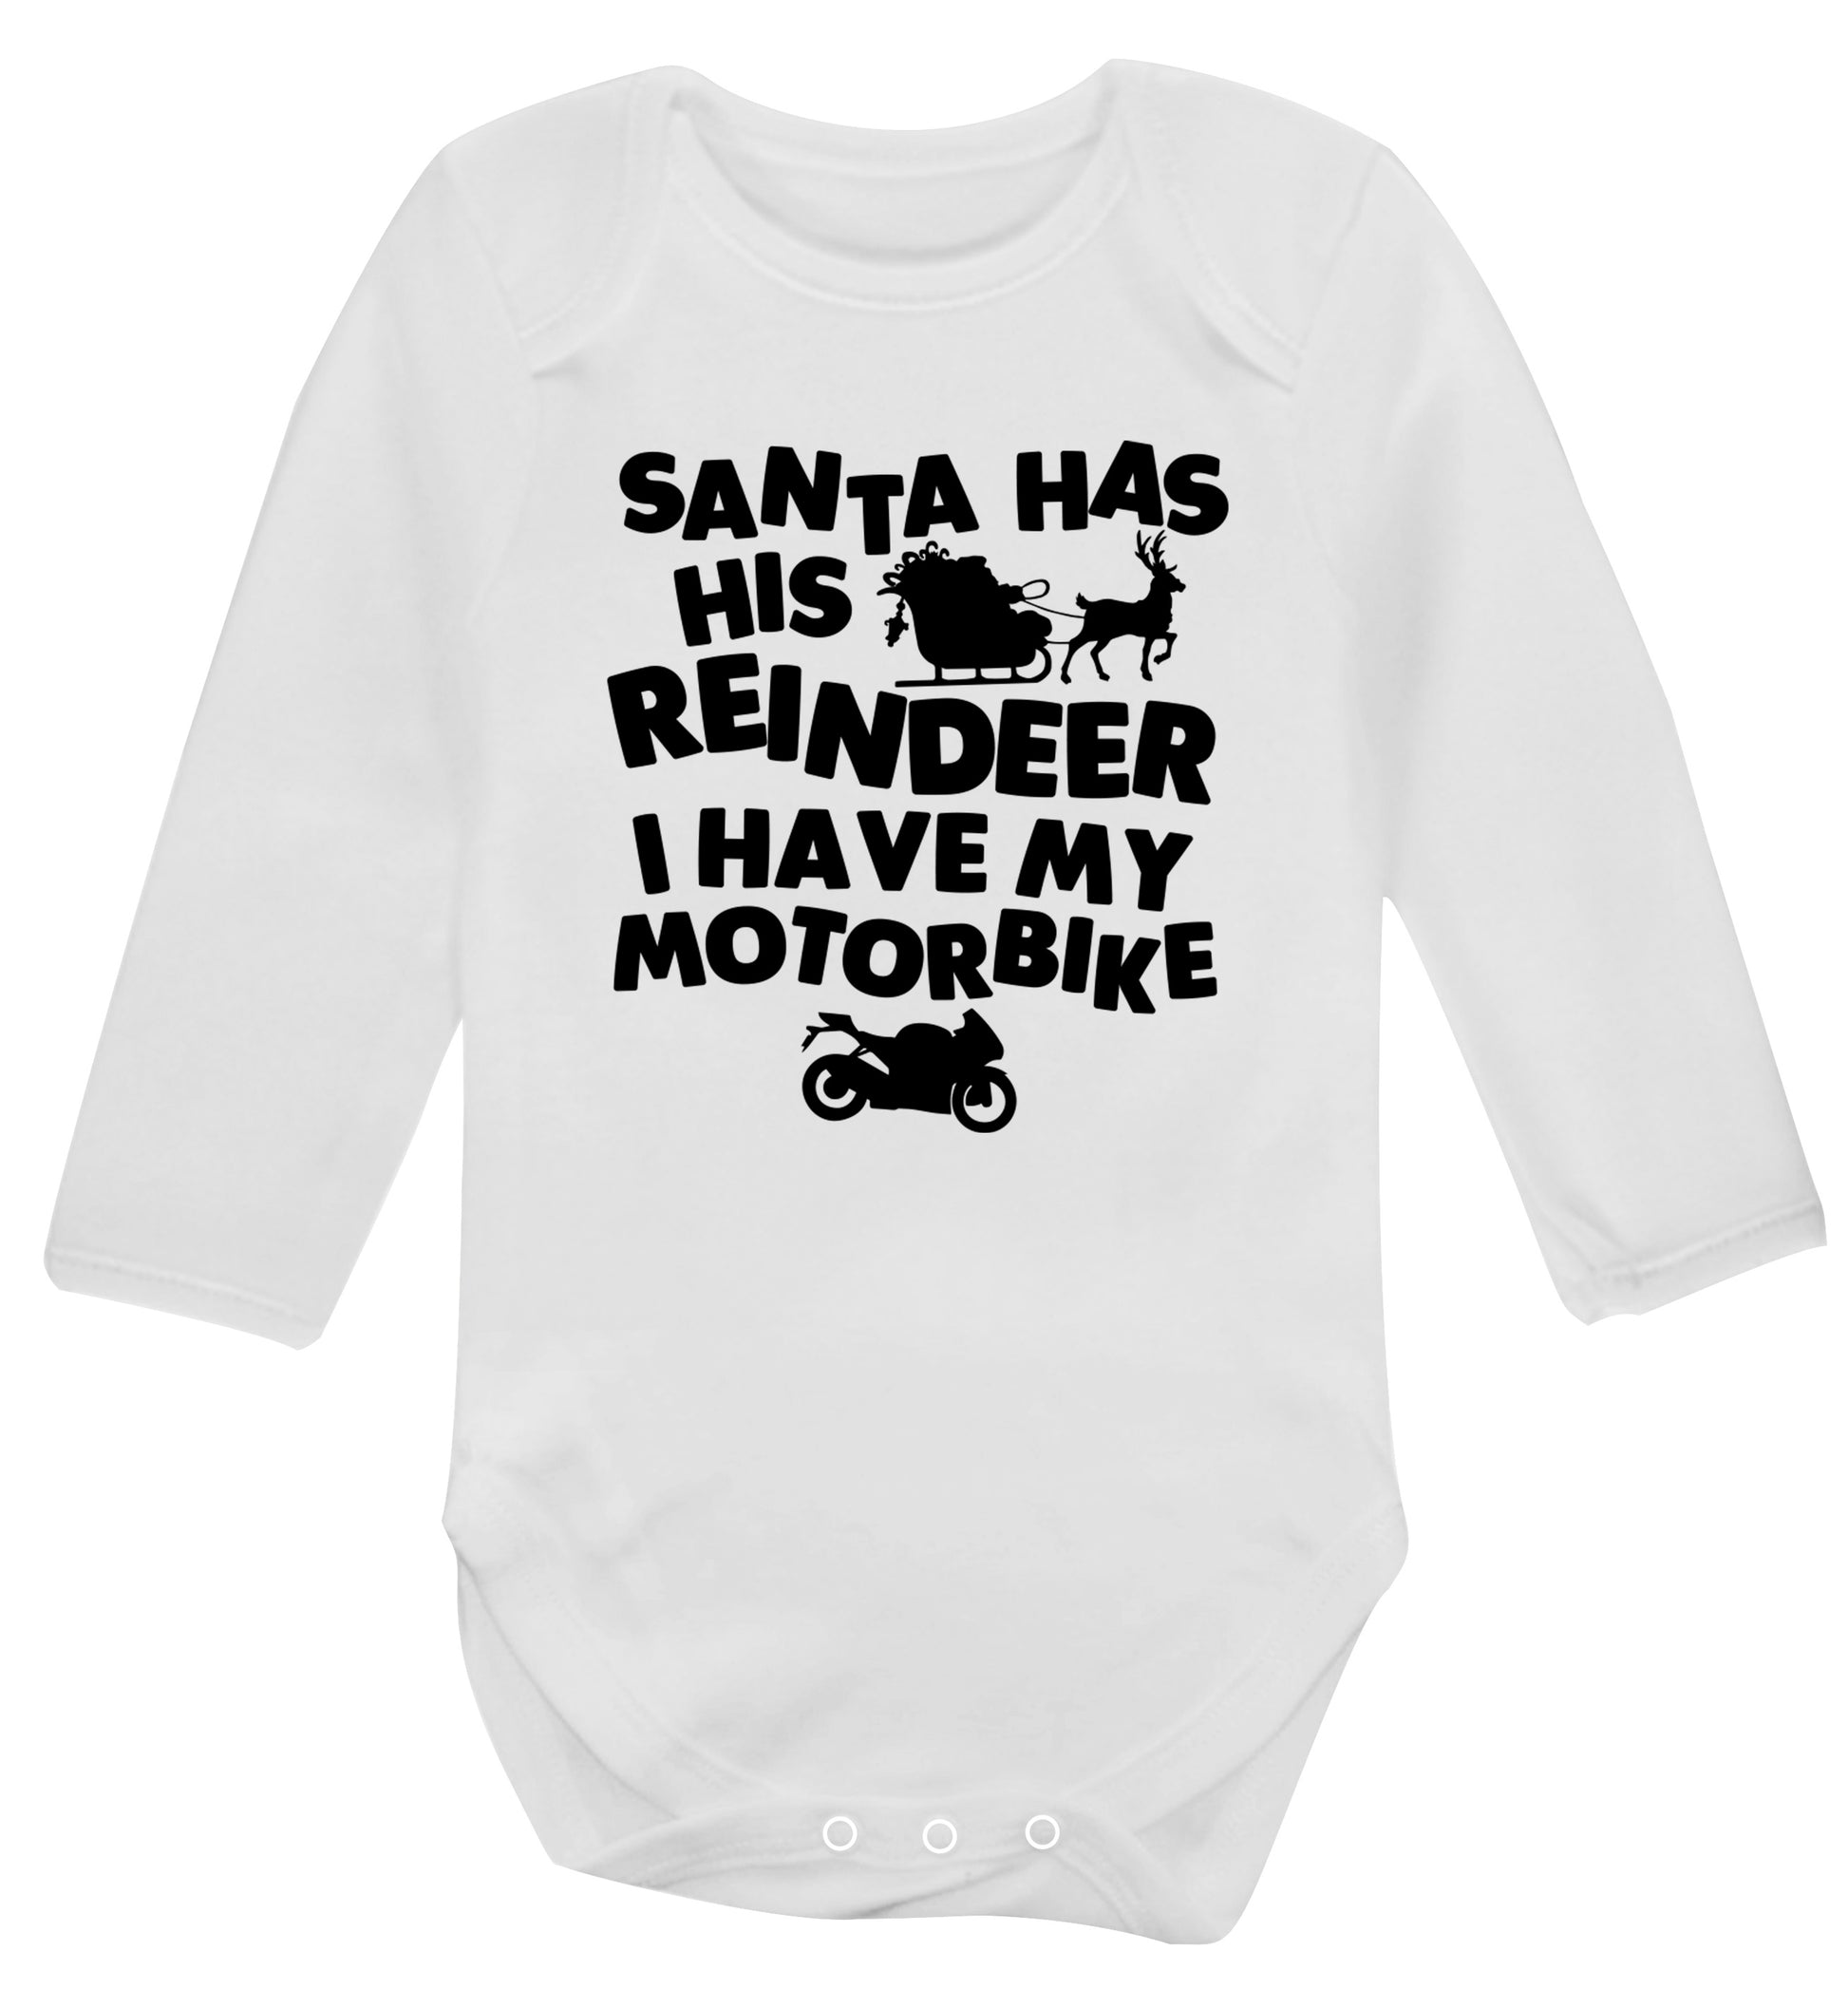 Santa has his reindeer I have my motorbike Baby Vest long sleeved white 6-12 months